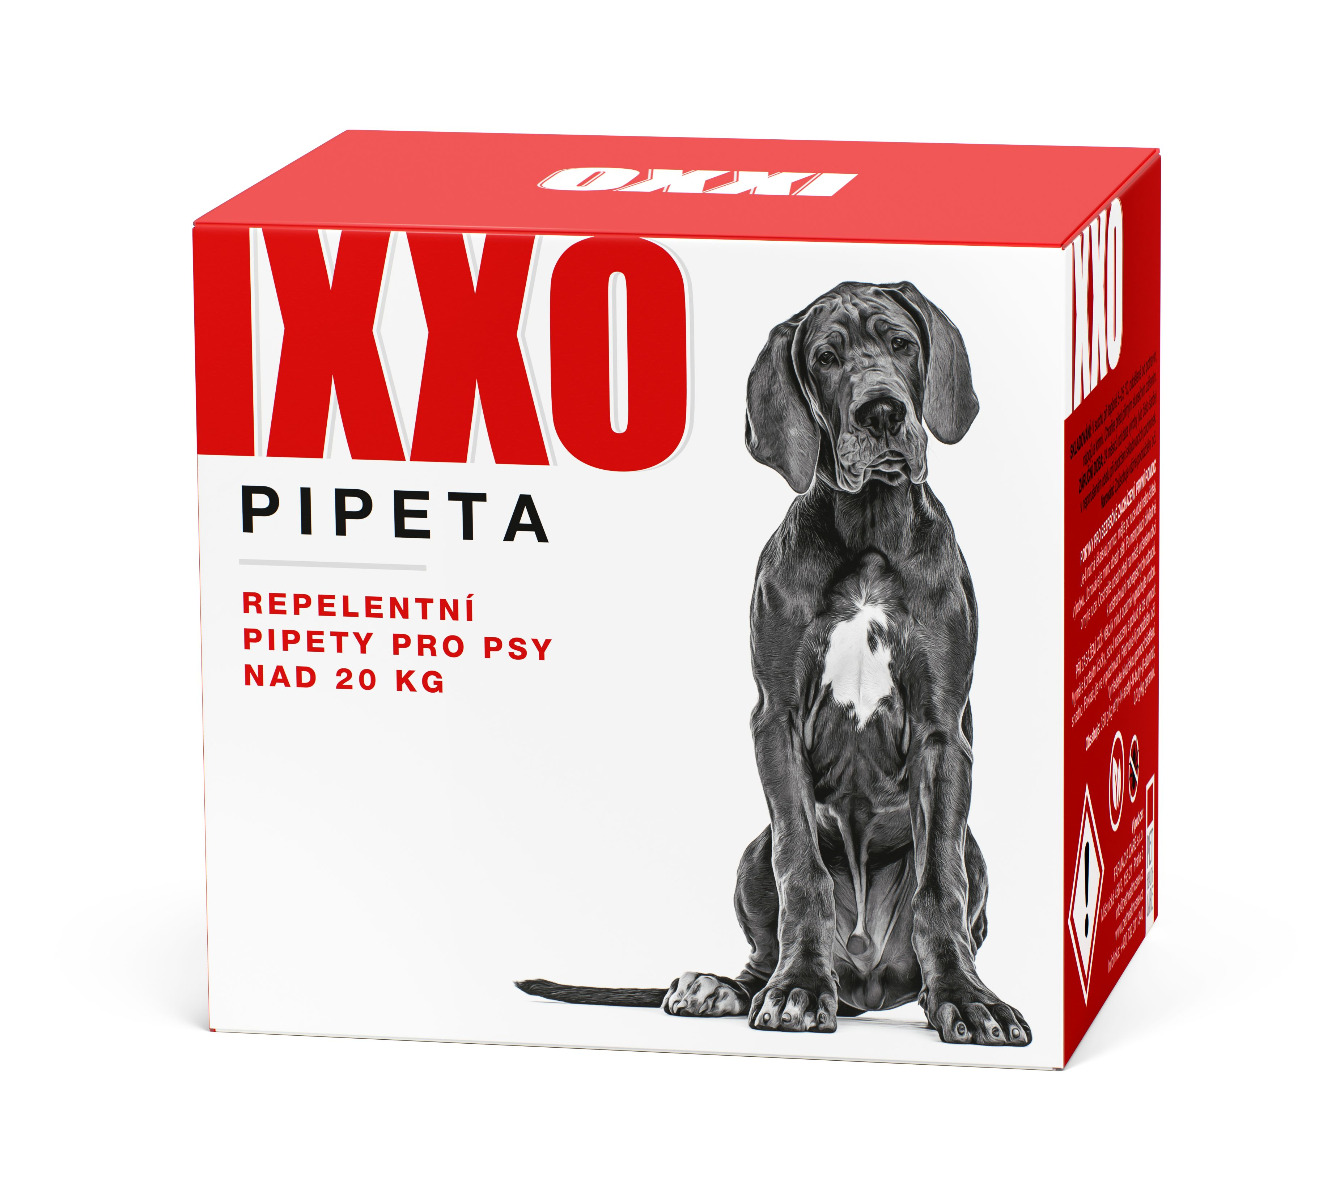 Pet health care IXXO Pipeta pro psy nad 20 kg 6x10 ml Pet health care